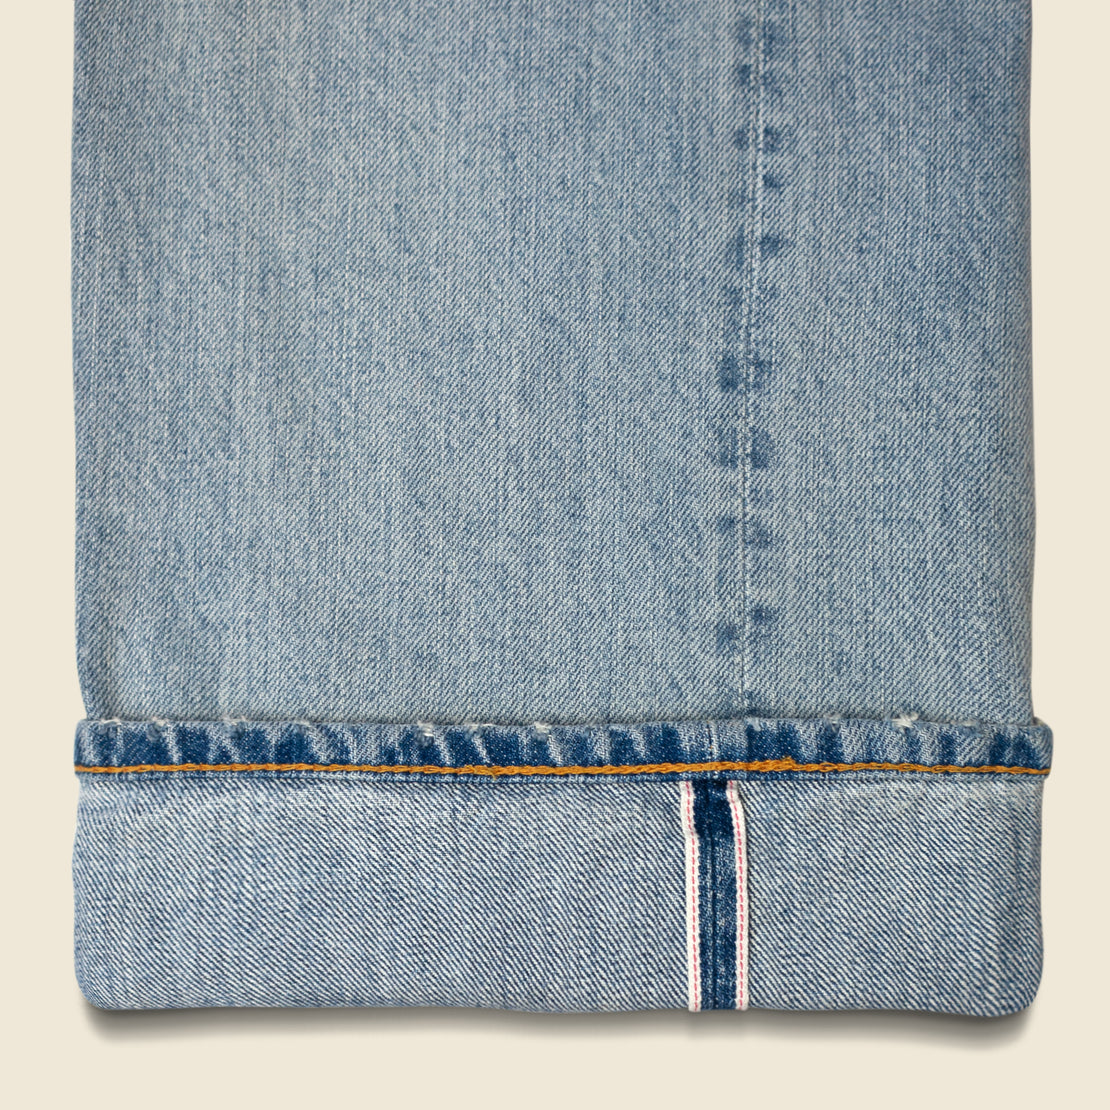 1947 501 Jean - Whiplash - Levis Vintage Clothing - STAG Provisions - Pants - Denim